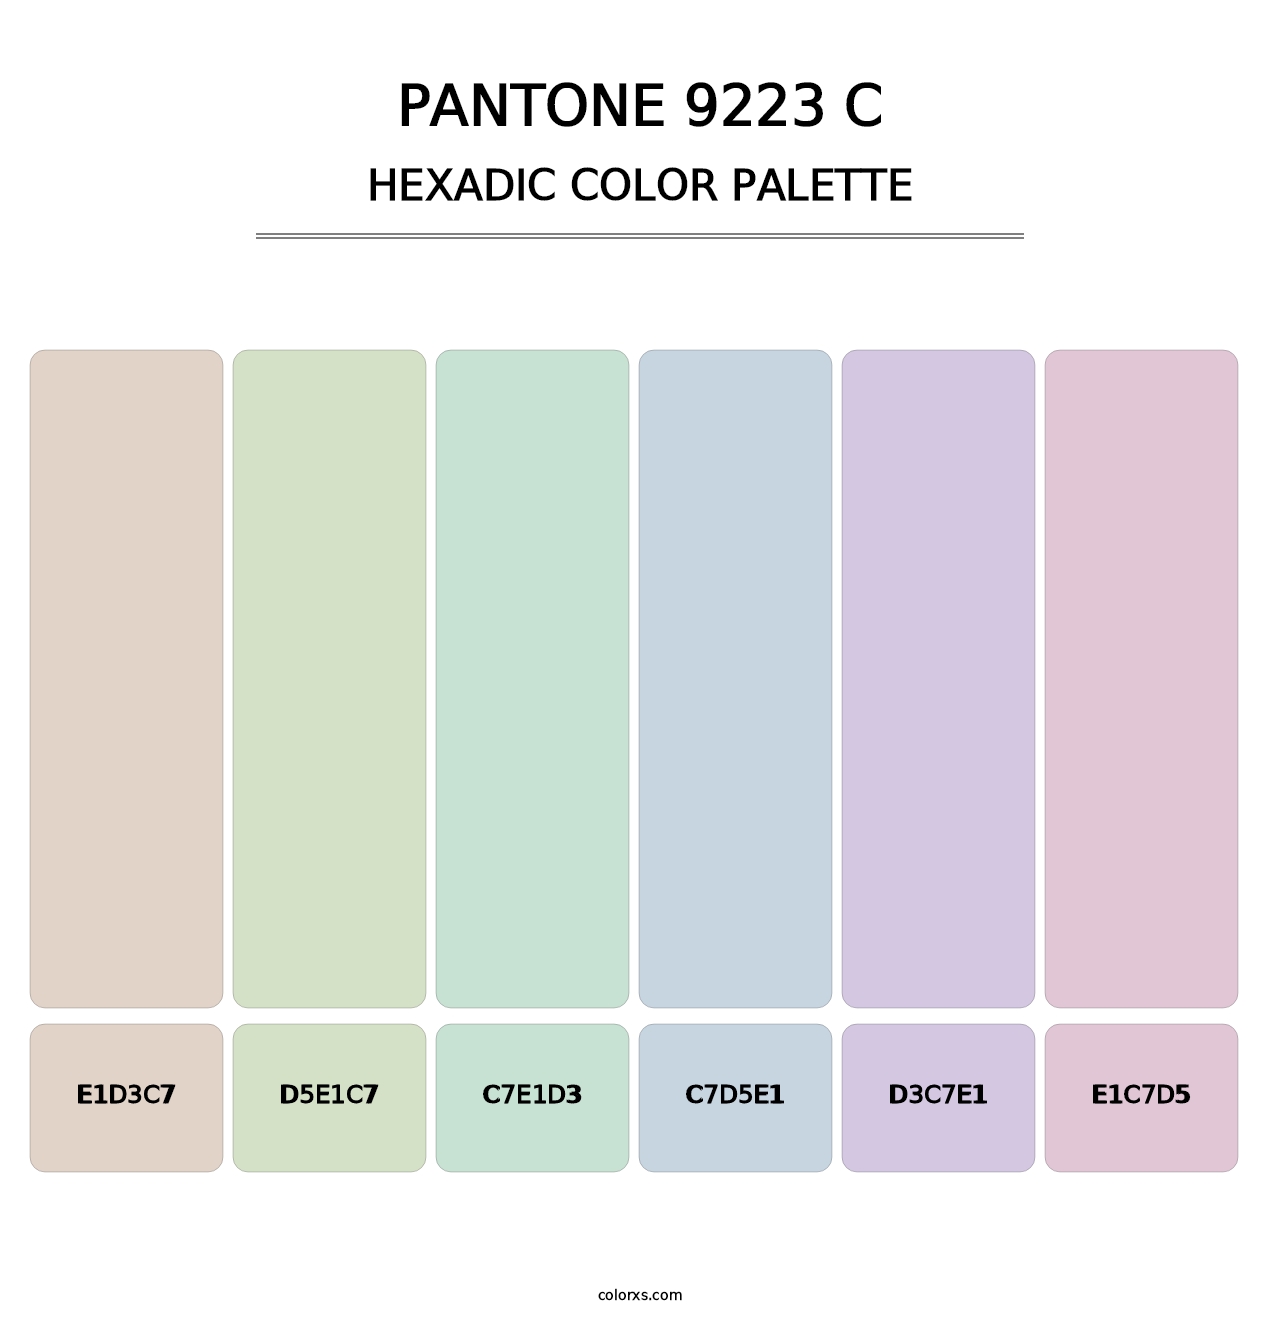 PANTONE 9223 C - Hexadic Color Palette